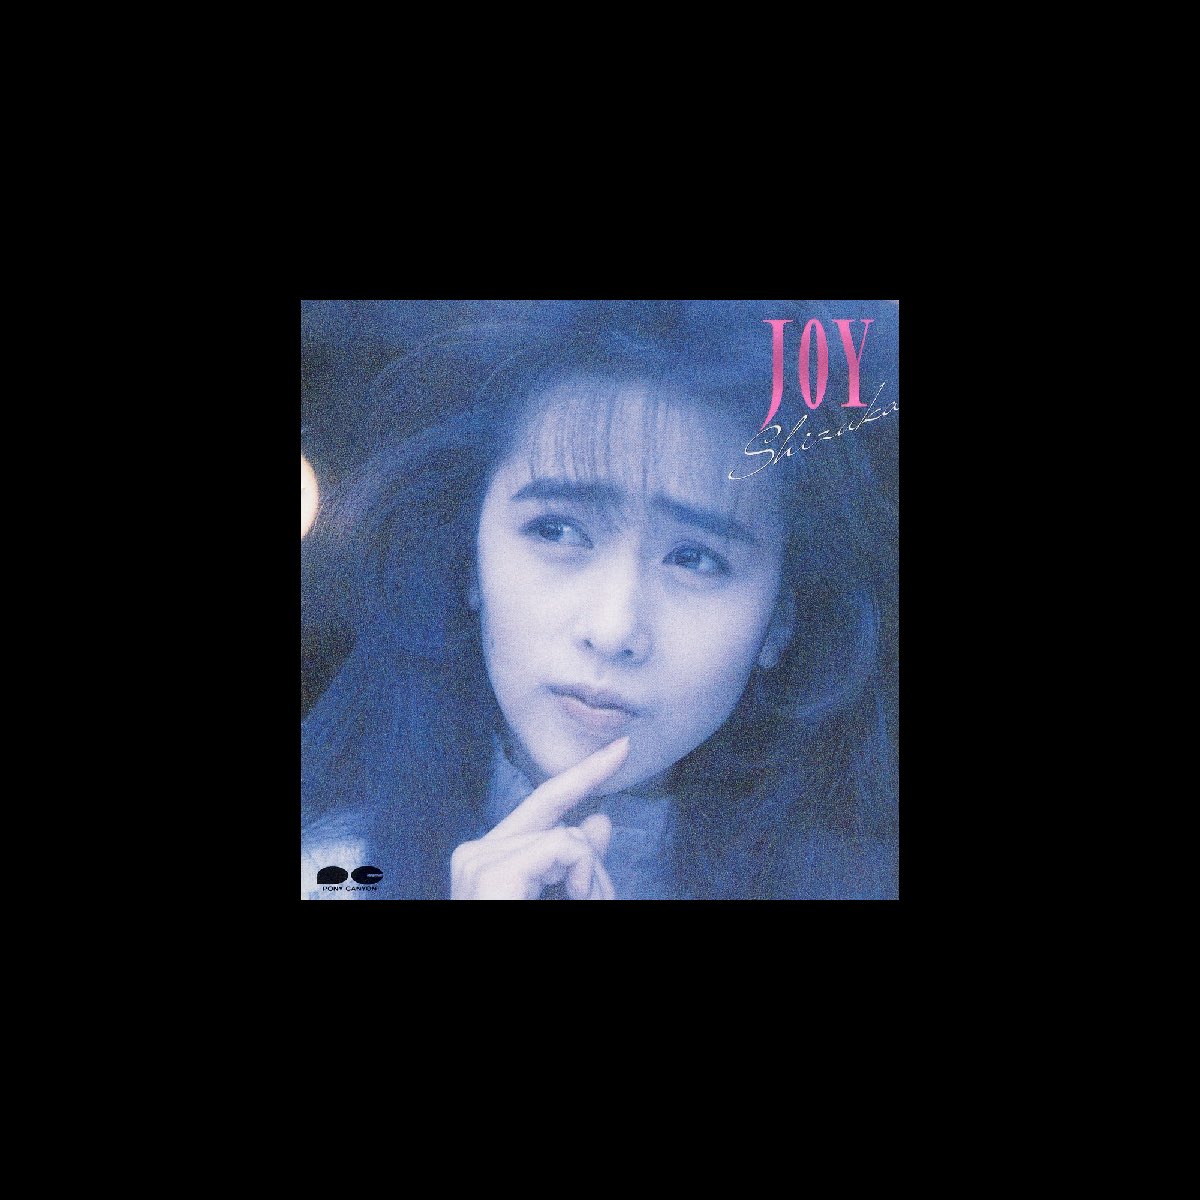 JOY - 工藤静香のアルバム - Apple Music